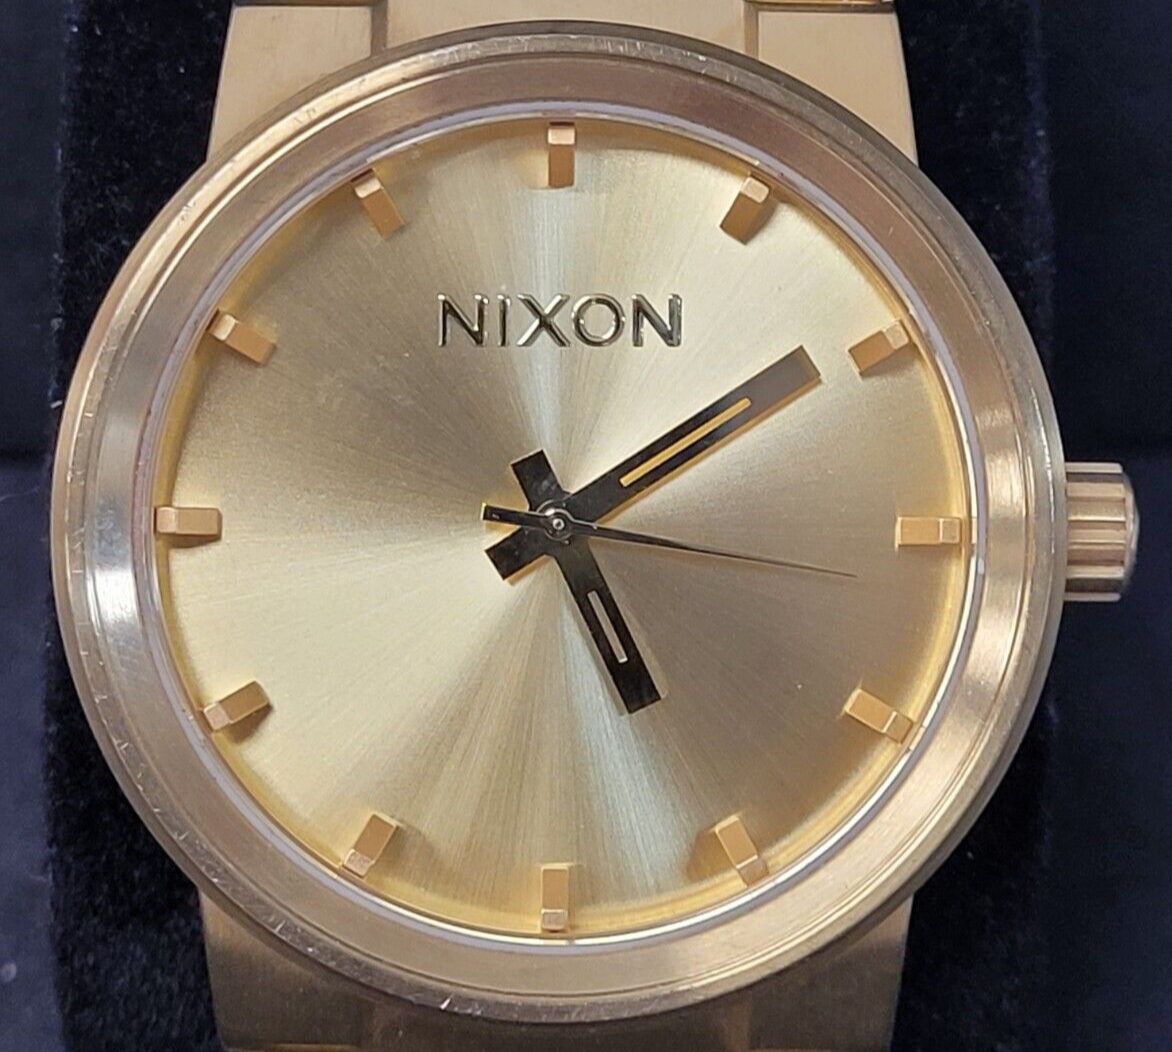 Buy Nixon The Cannon men's Watch A160-756 - Ashford.com